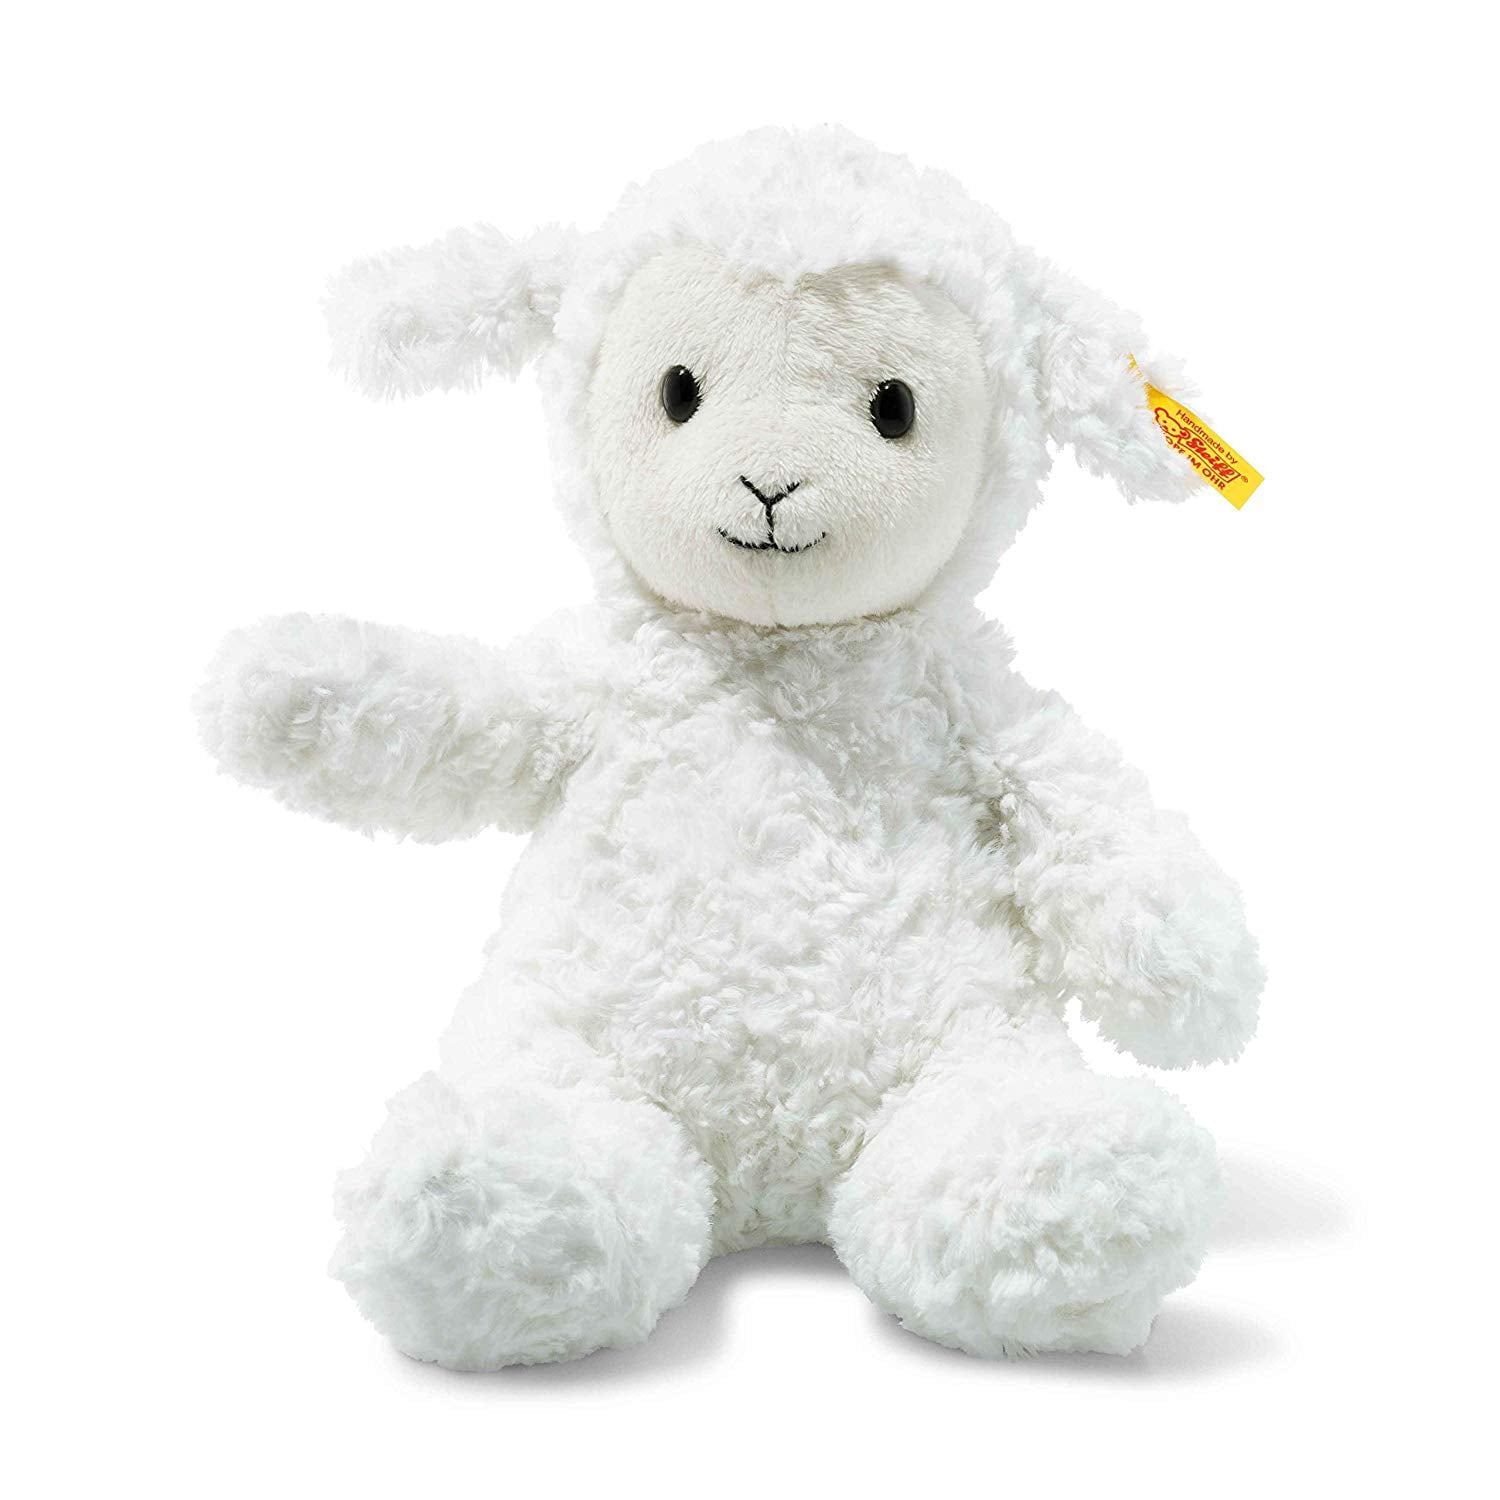 lamb stuffed animal